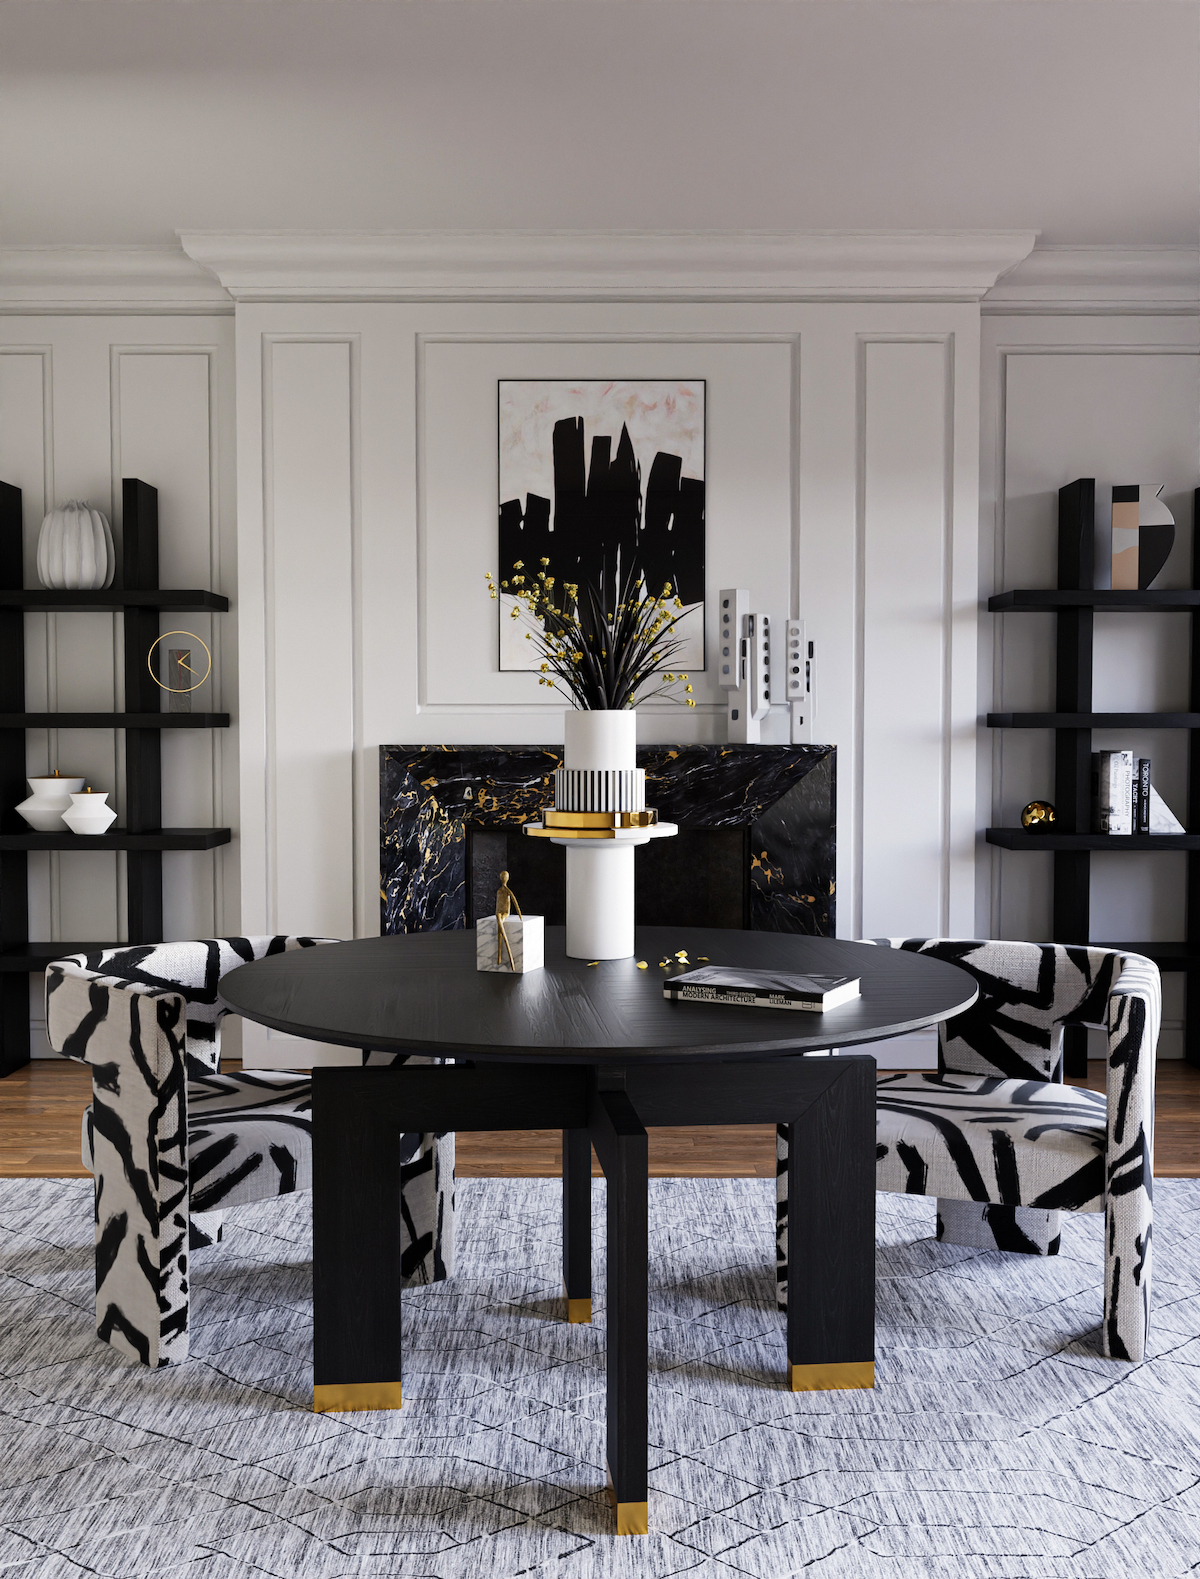 Modern black and white image of living room